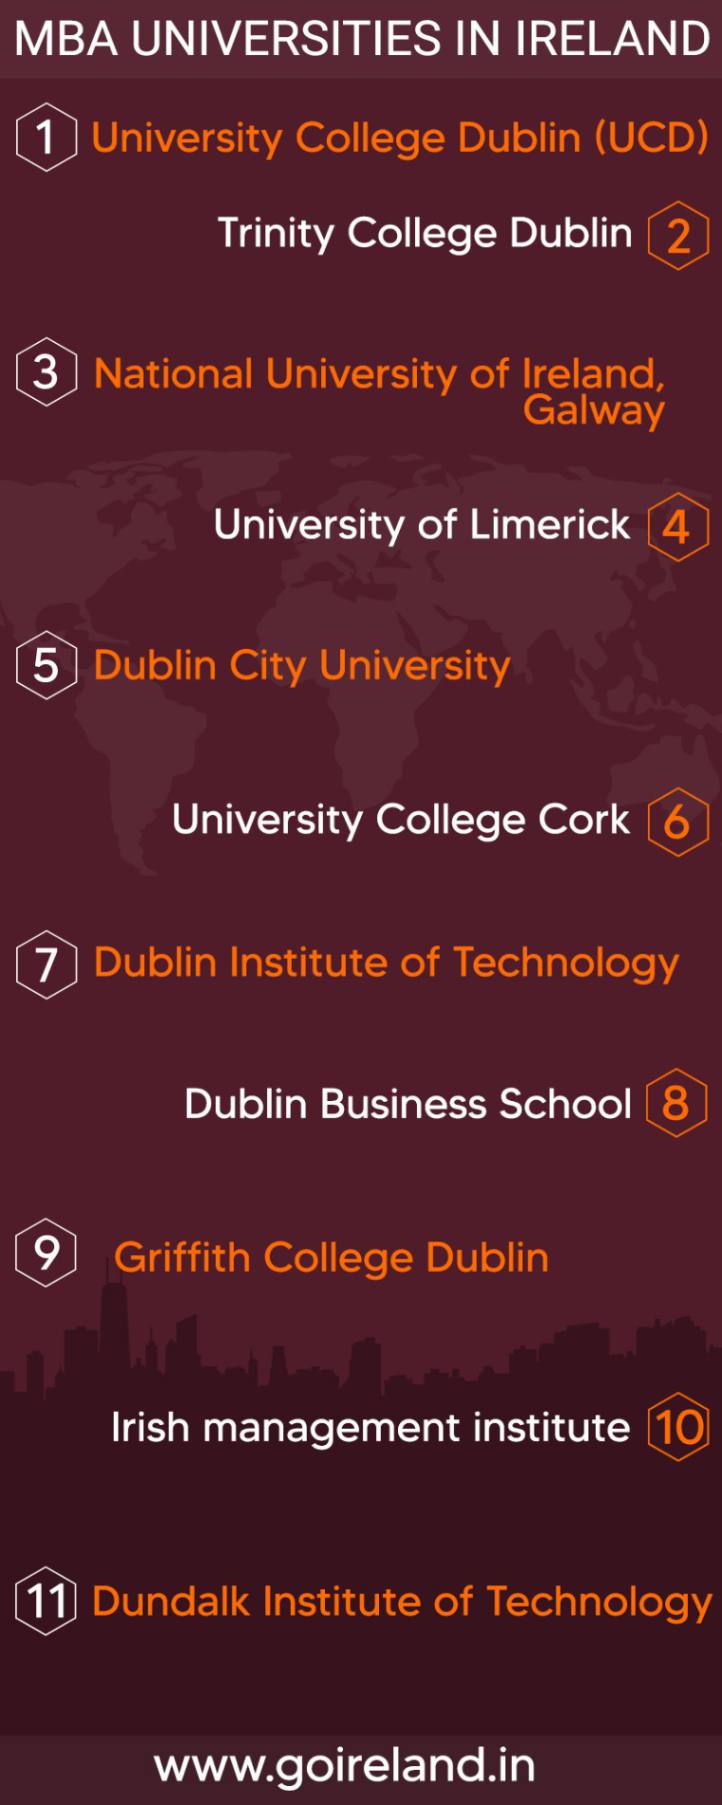 MBA Universities in Ireland